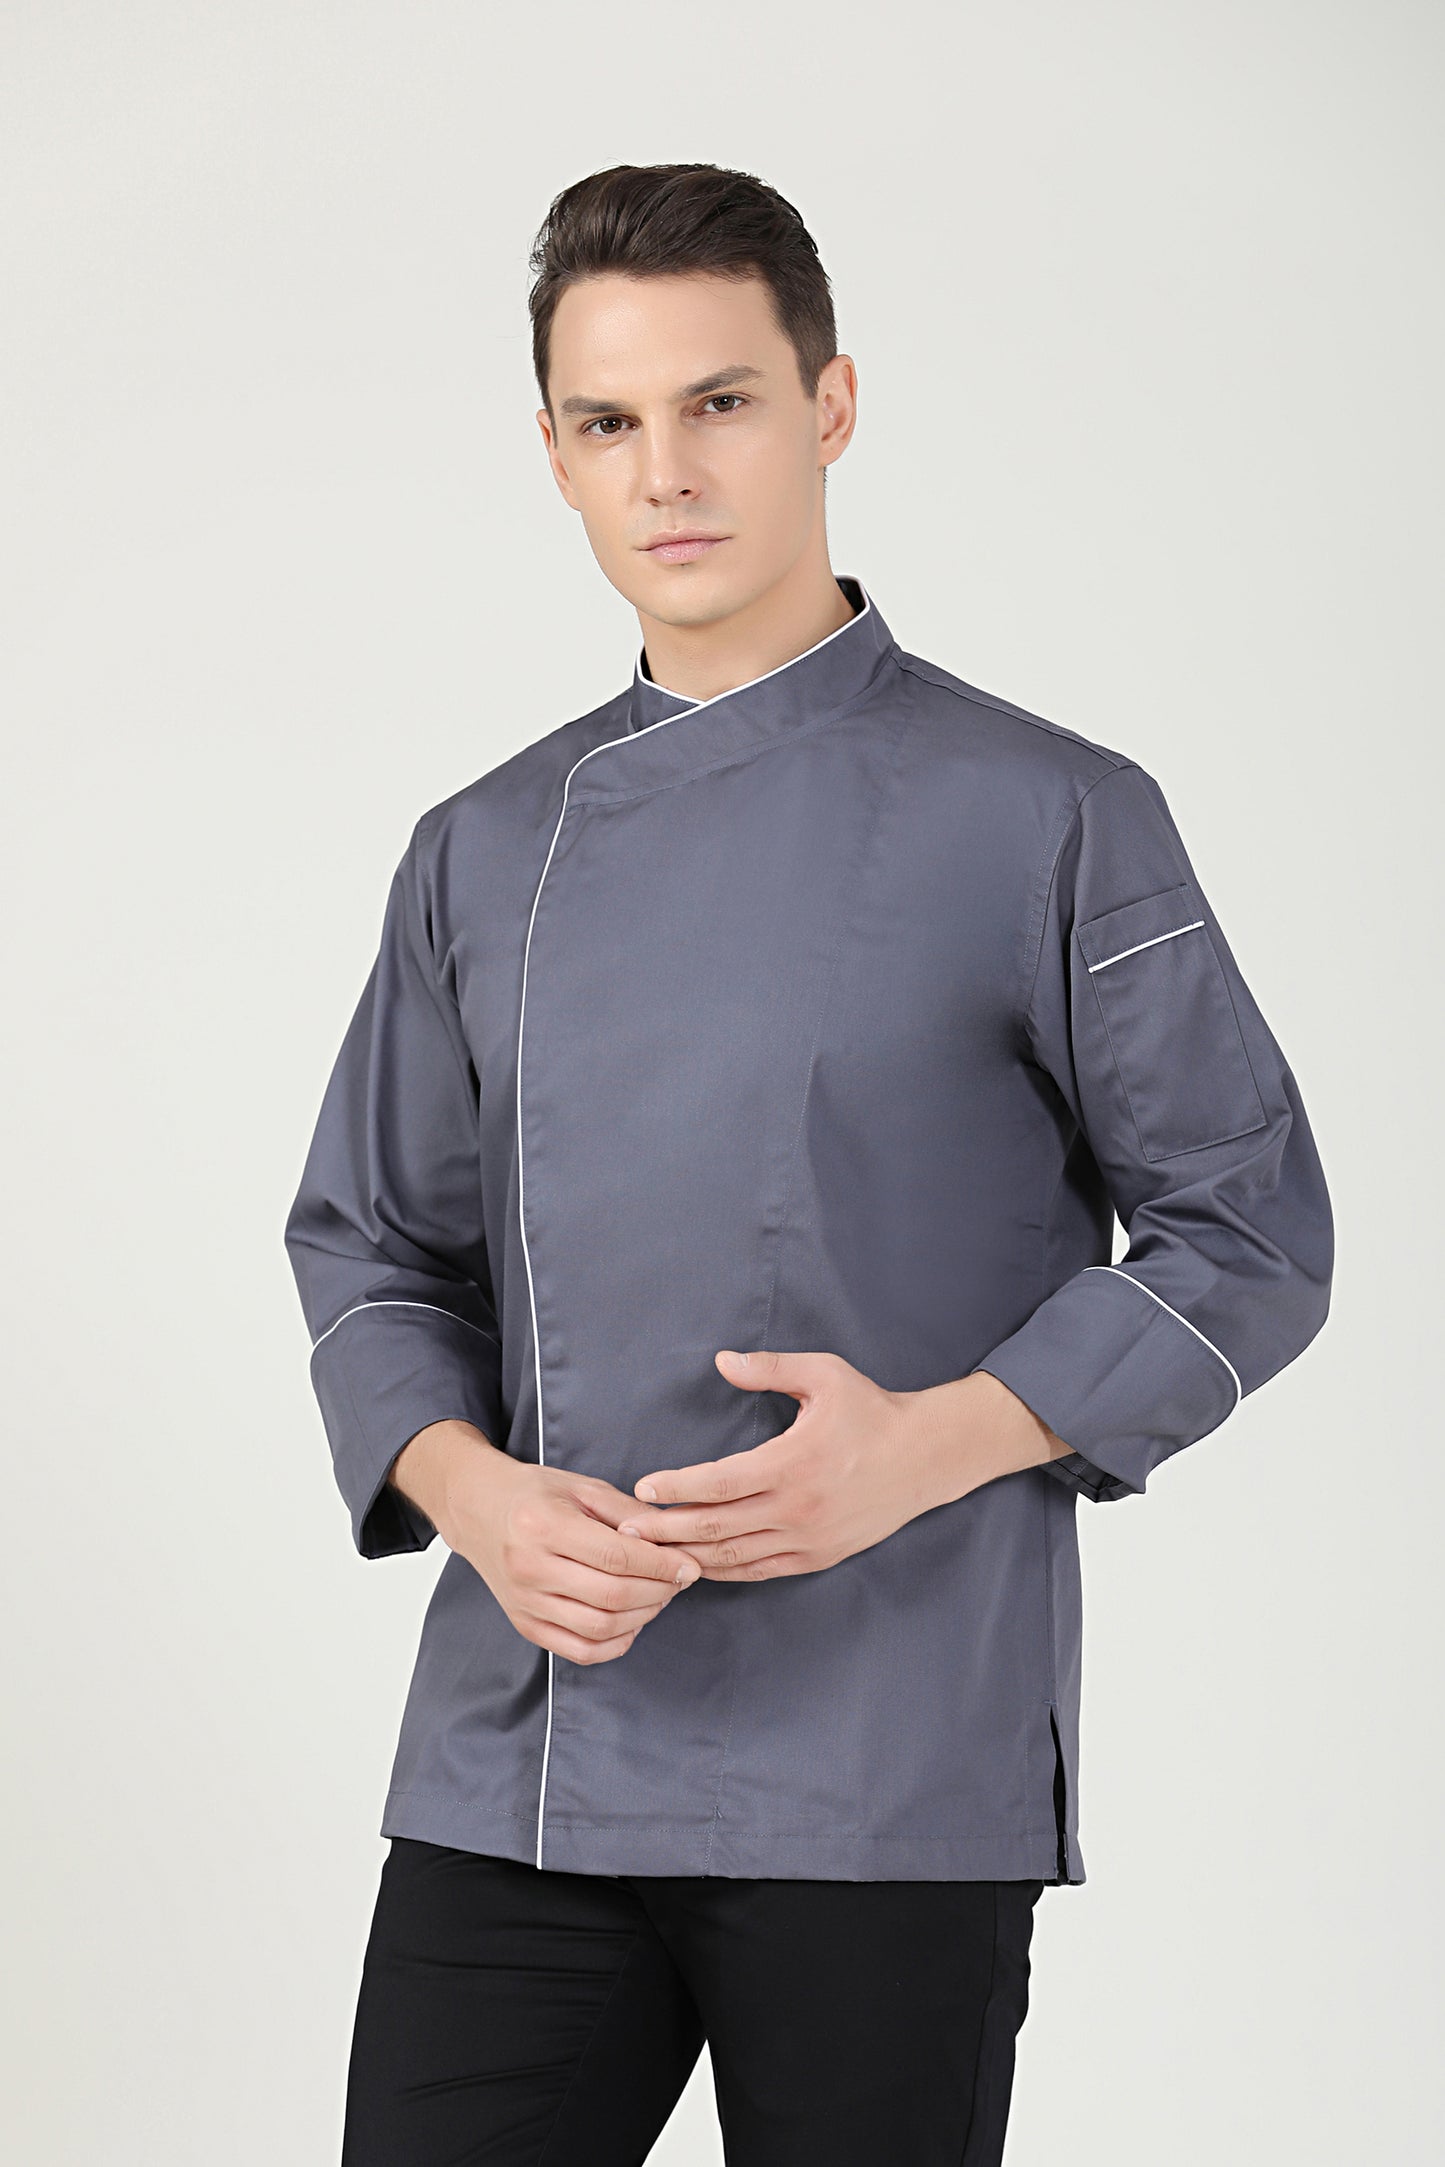 Sage Grey Chef Jacket, Long Sleeve